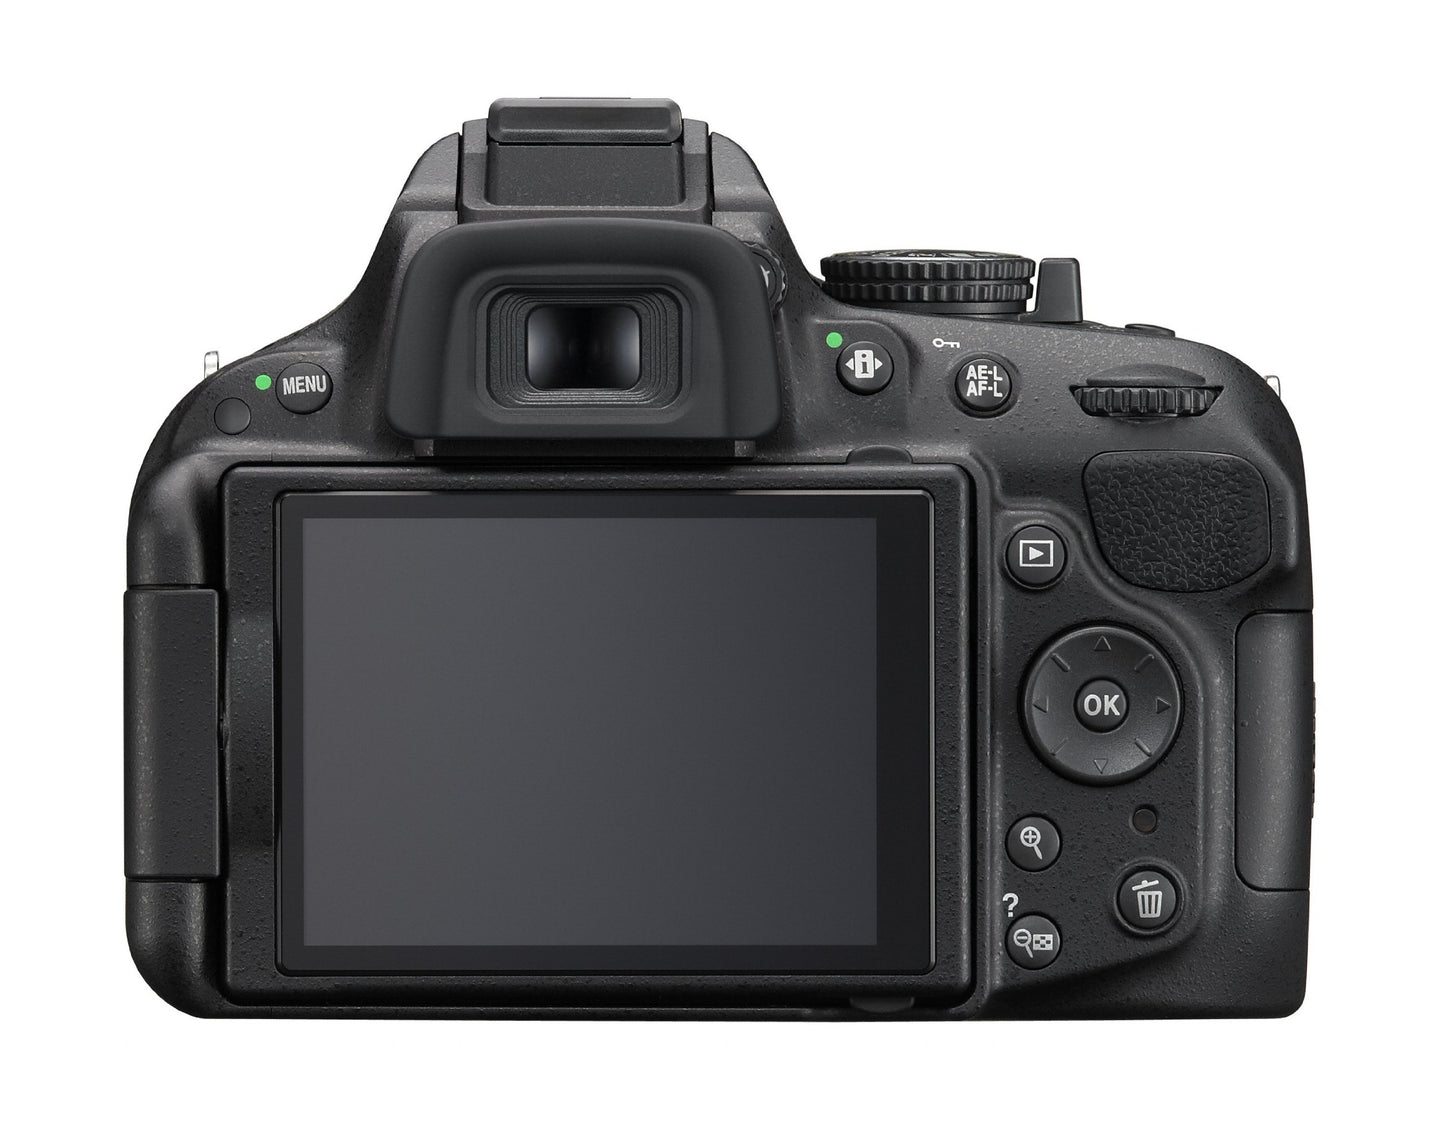 Nikon D3200 24.2 Megapixel 3D Digital SLR Camera Body Only